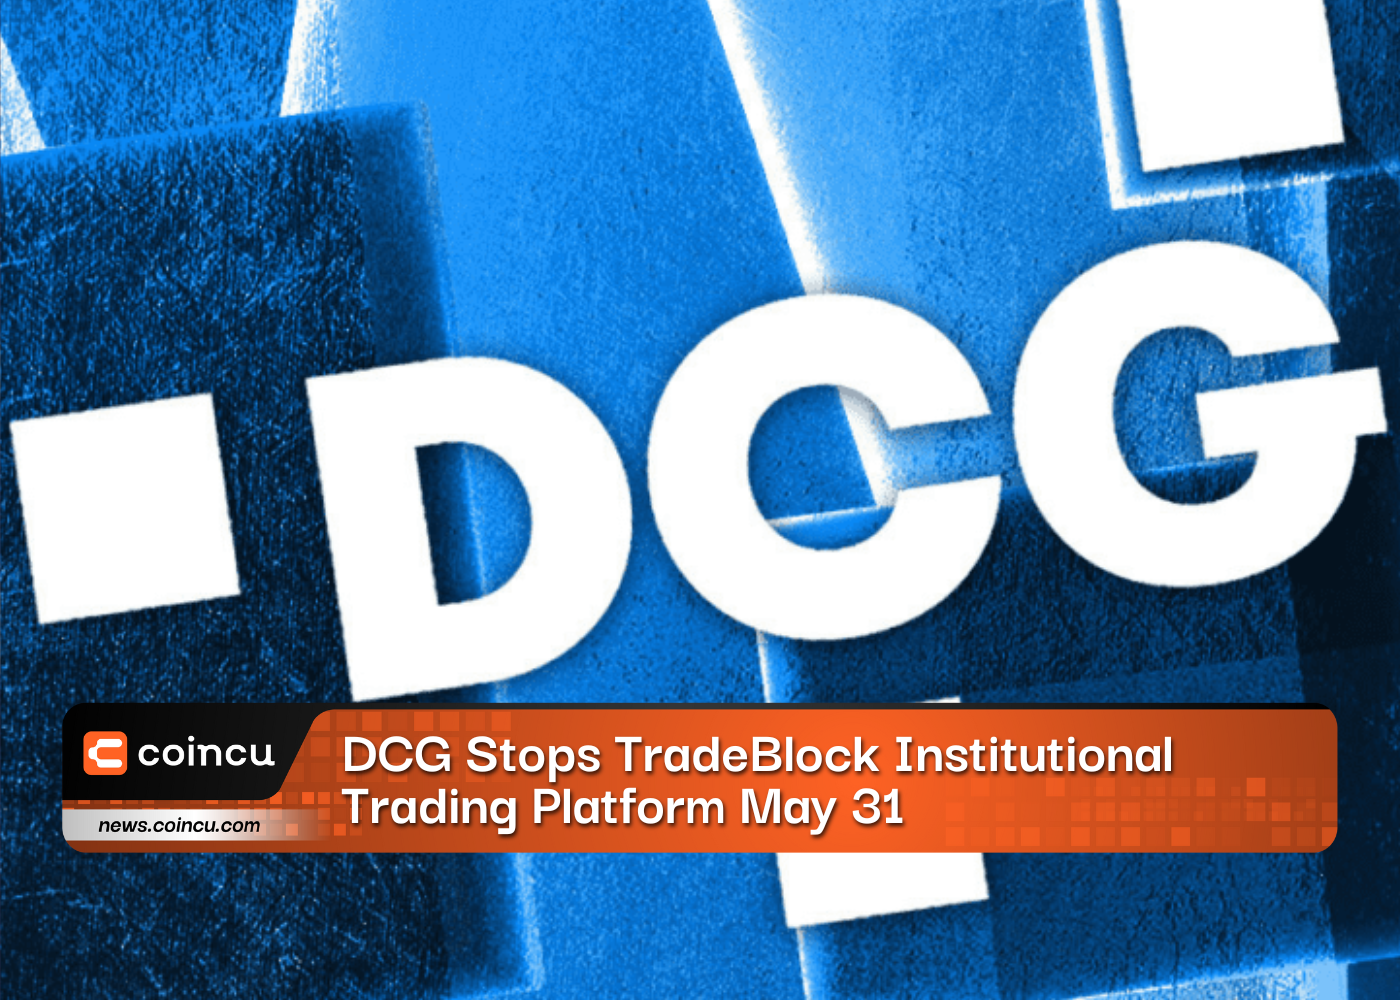 DCG Stops TradeBlock Institutional Trading Platform May 31